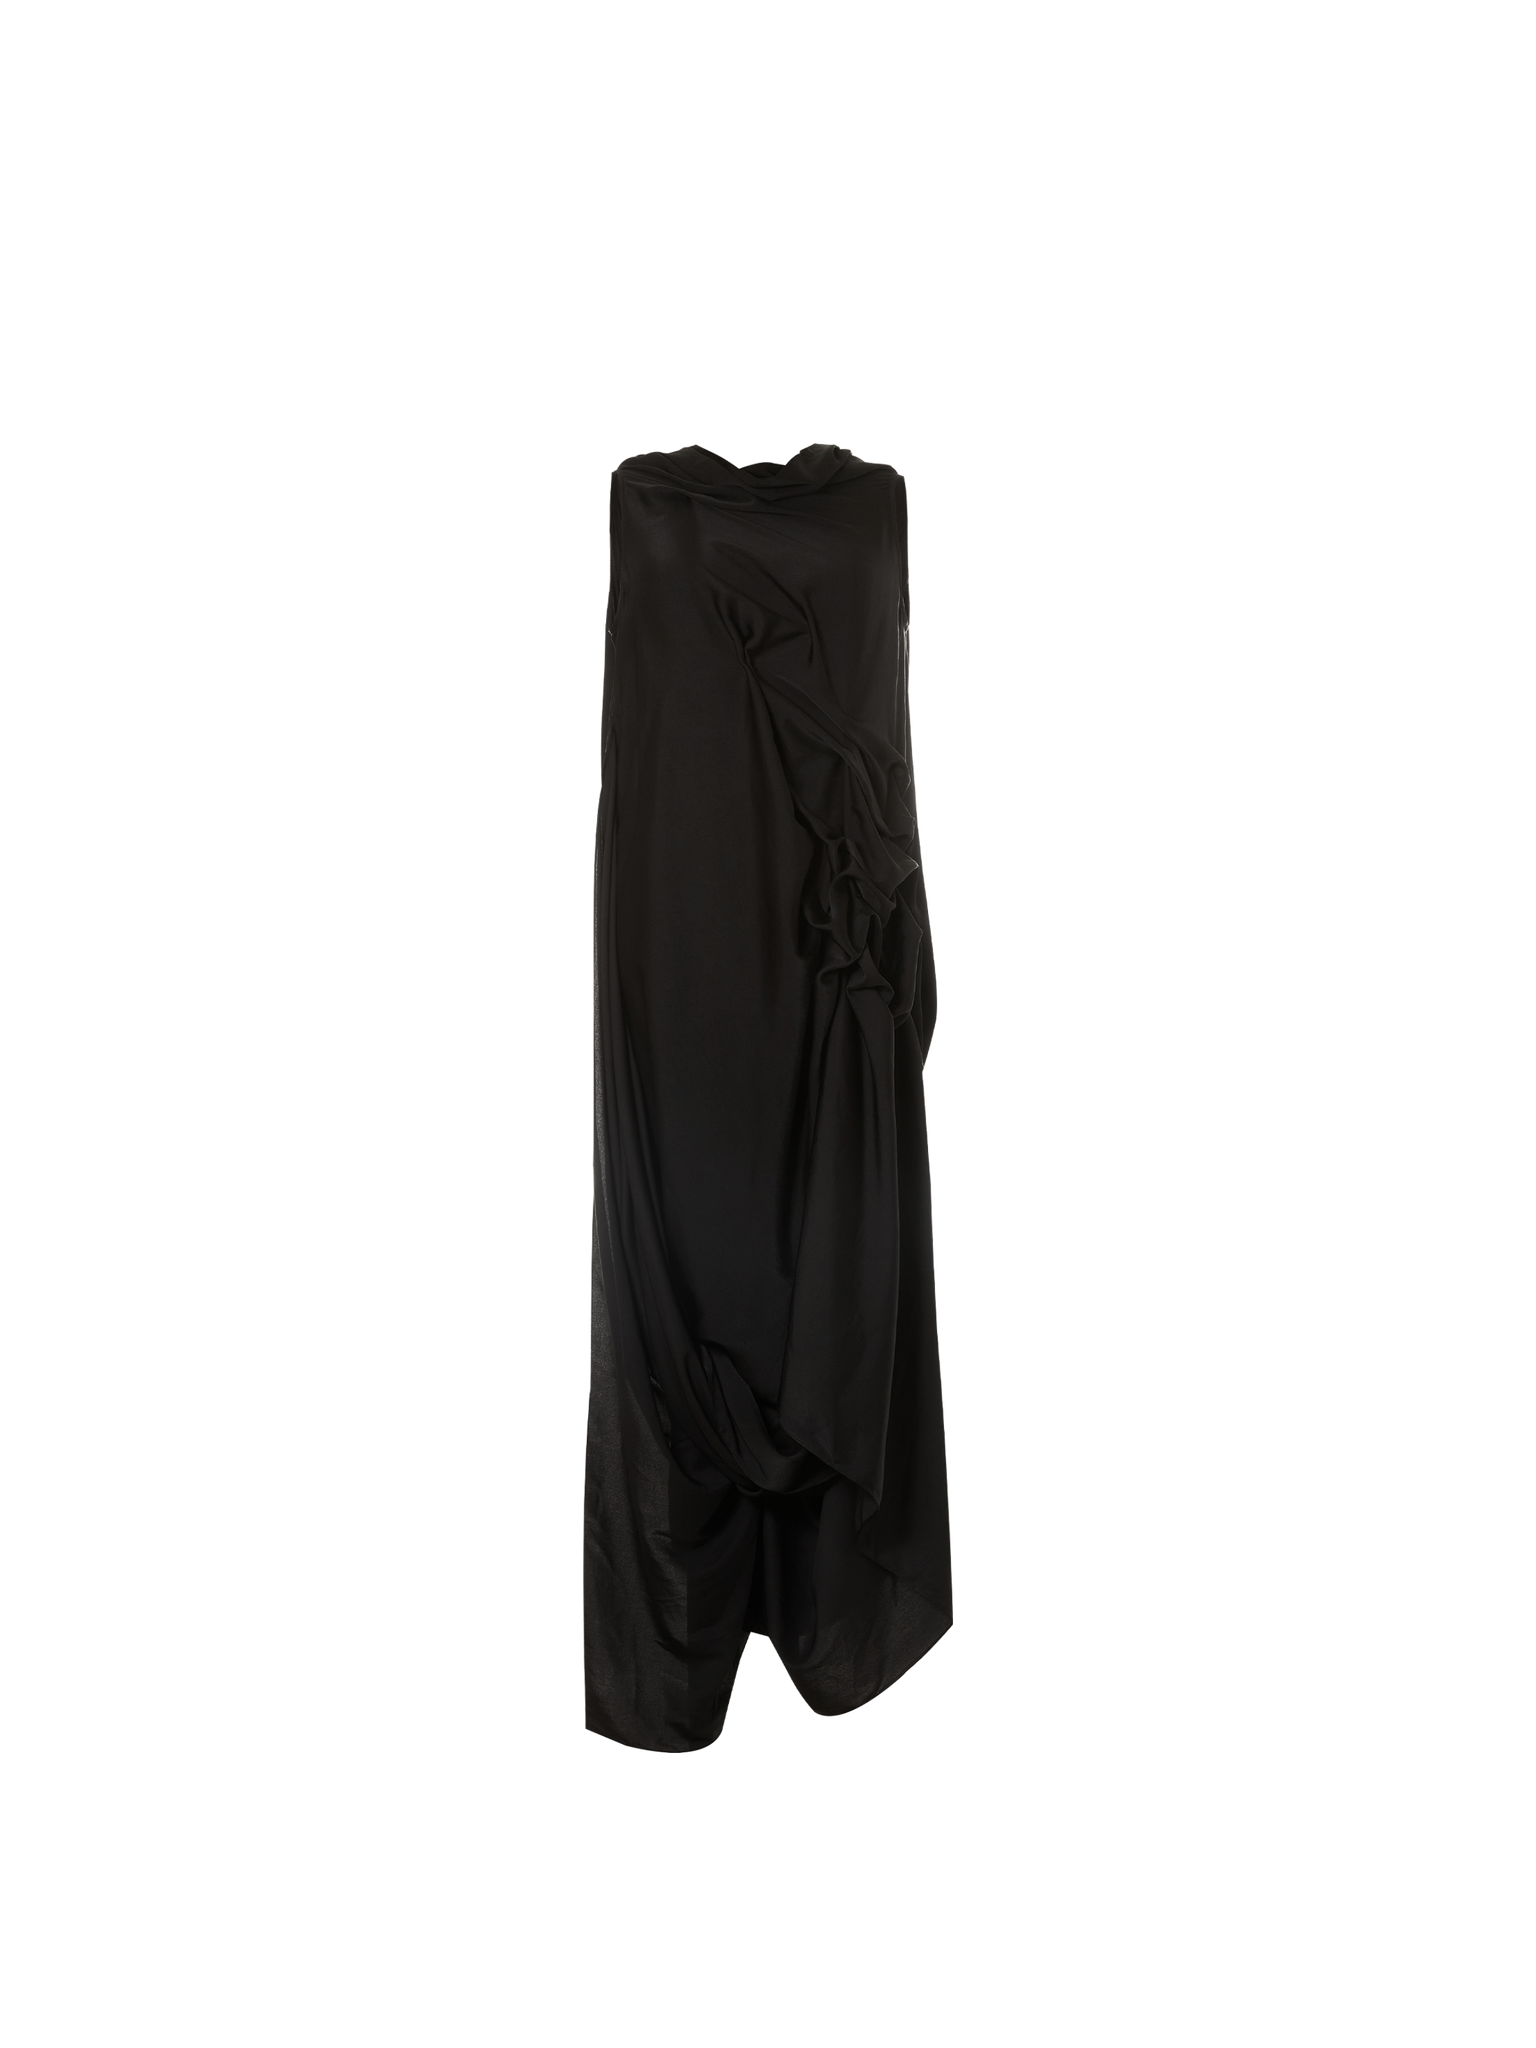 Black One-piece Dress Long